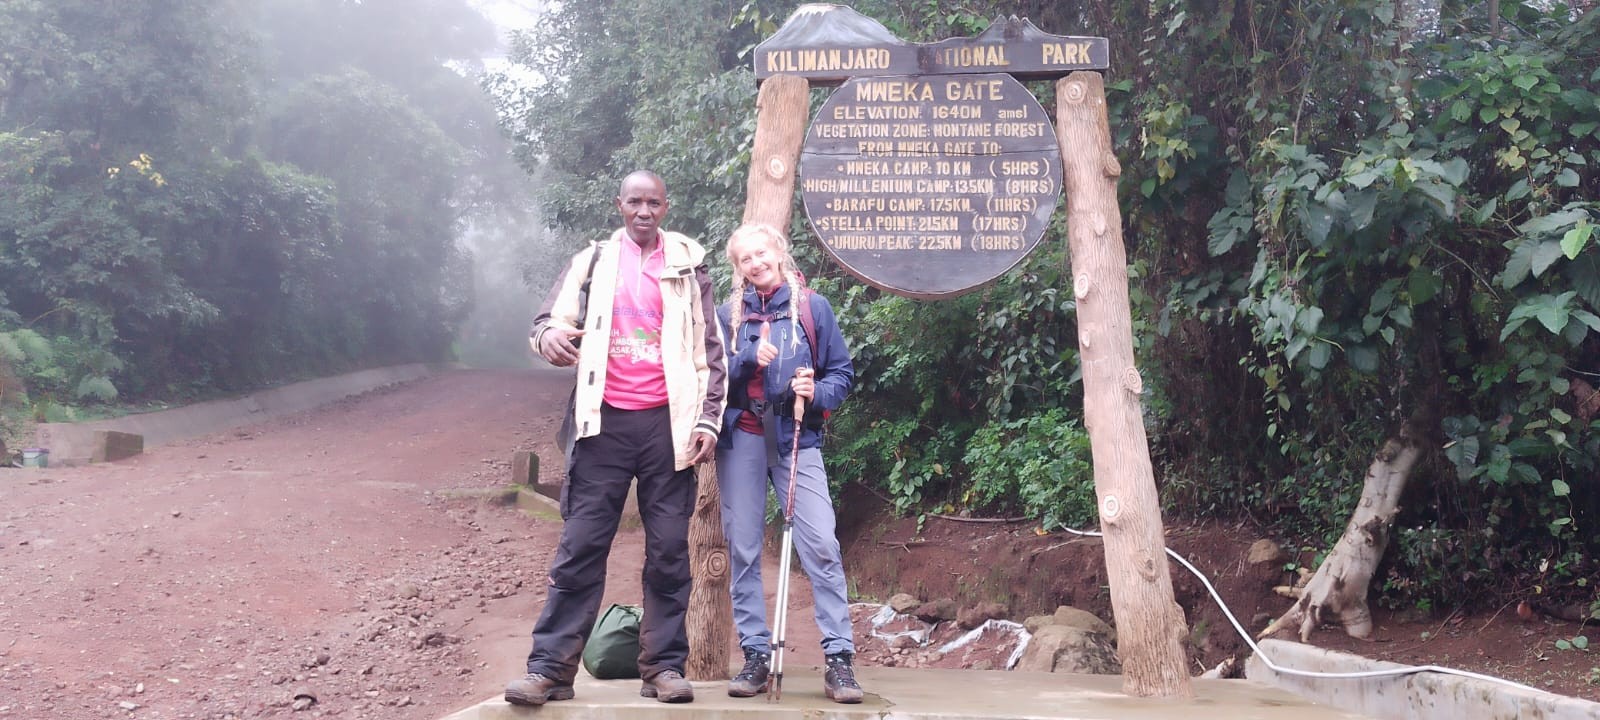 Climbing mount kilimanjaro trekking hiking active adventures epic tours safaris yha kenya travel mountain adventures tanzania tours 4 